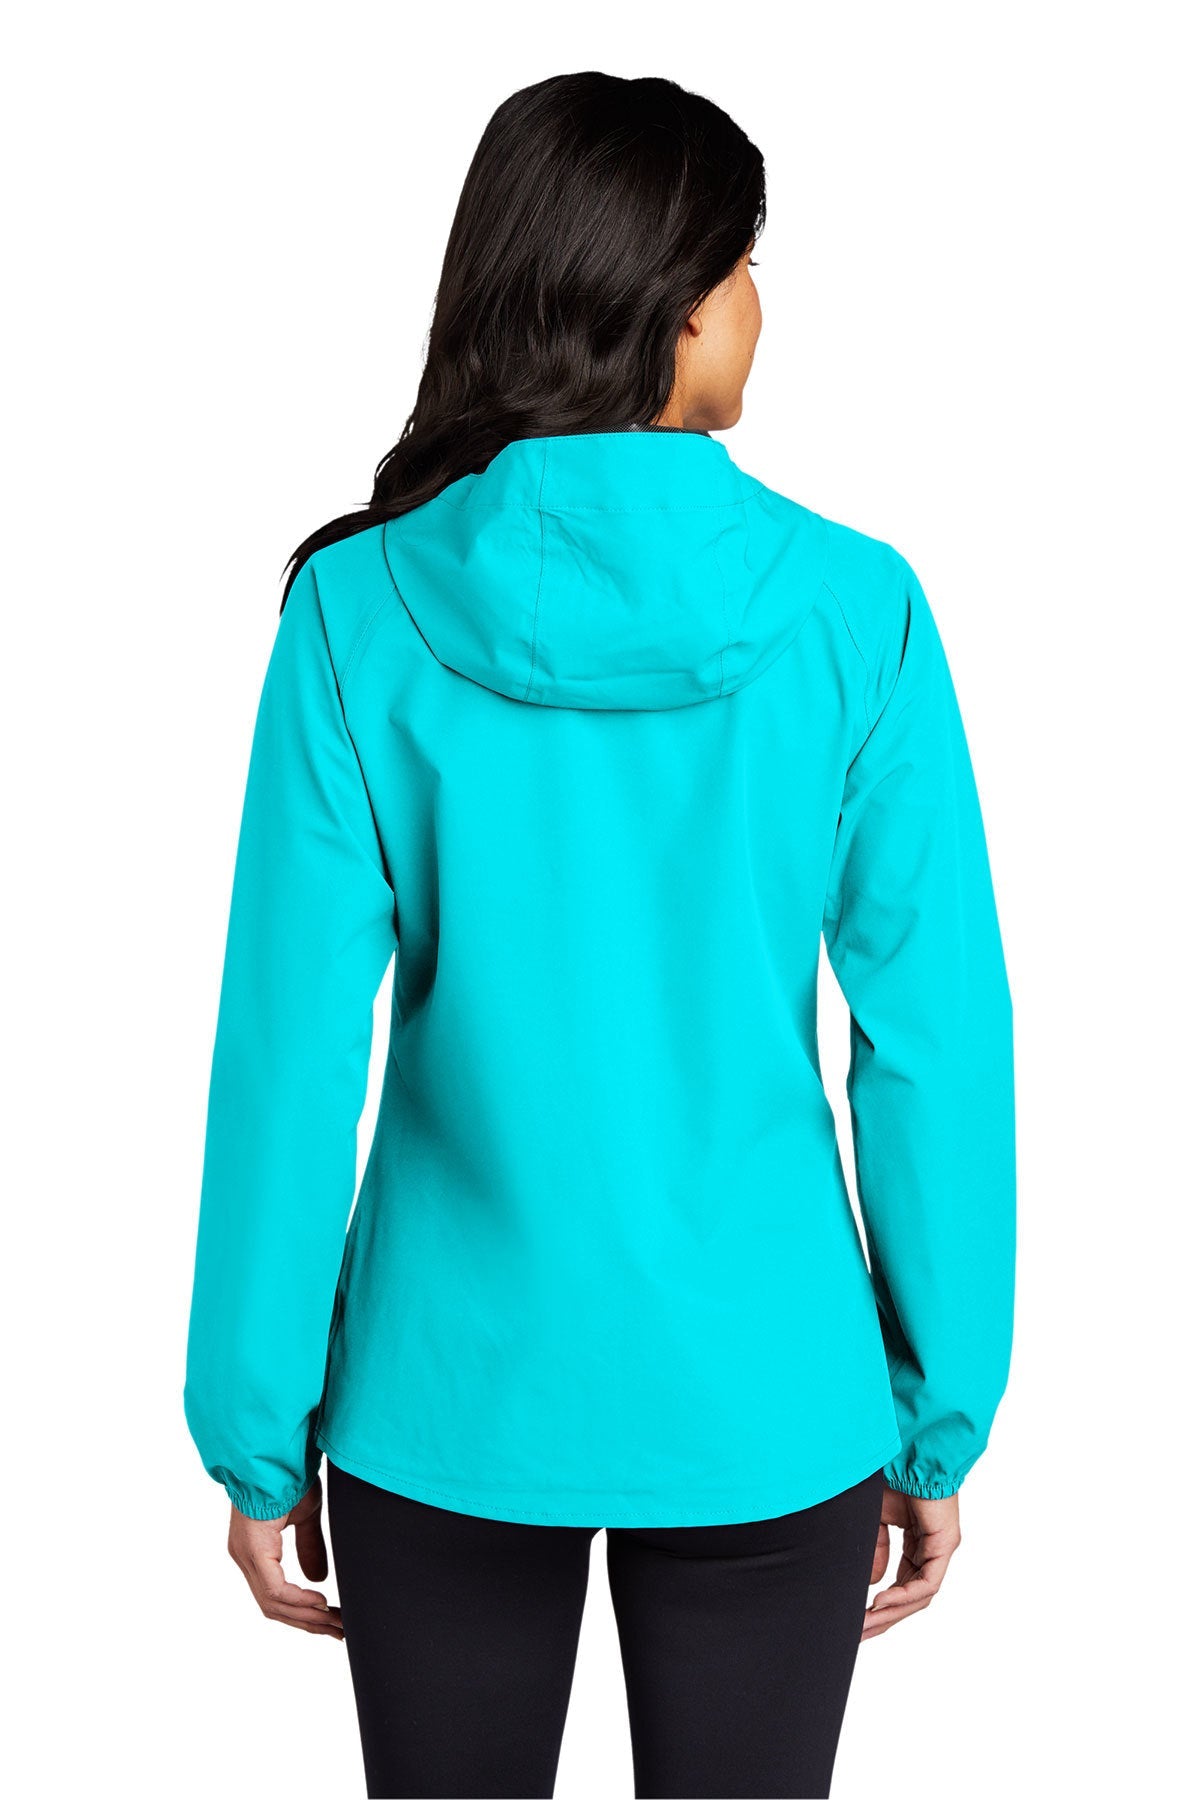 Port Authority Ladies Essential Branded Rain Jackets, Light Cyan Blue